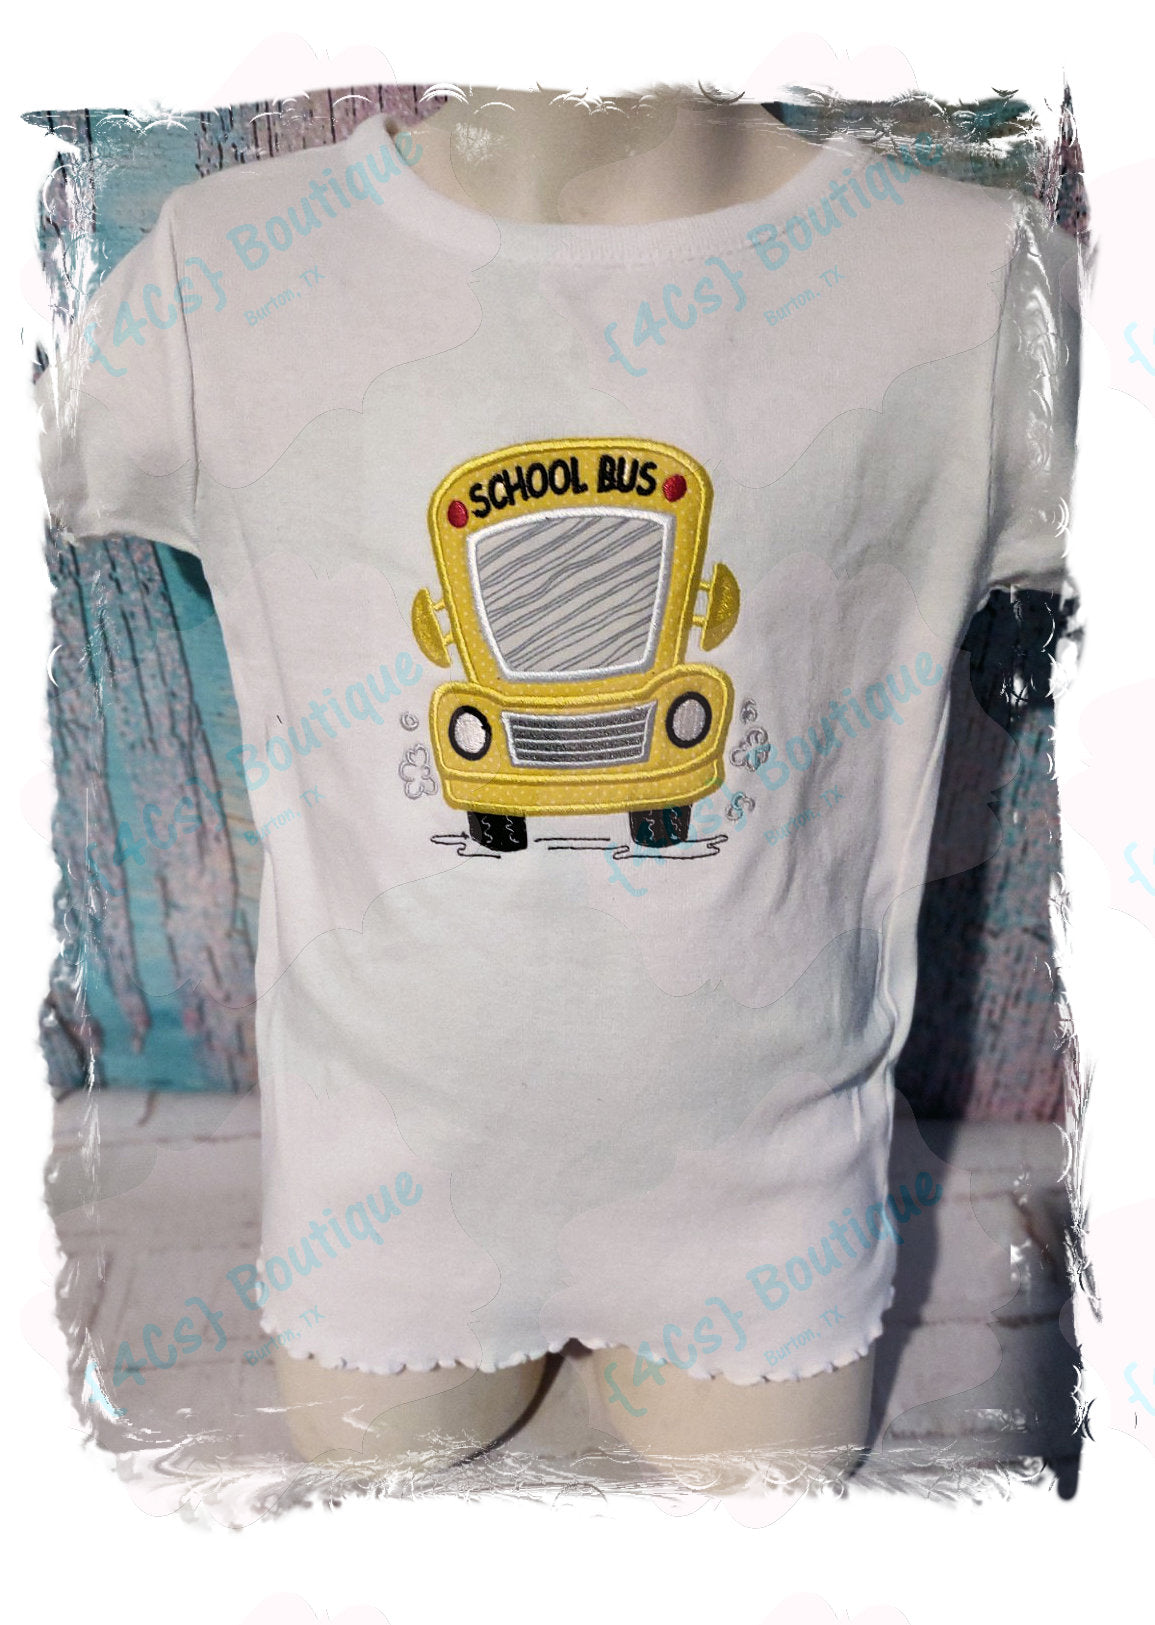 Size Small School Bus Appliqued Girls Shirt